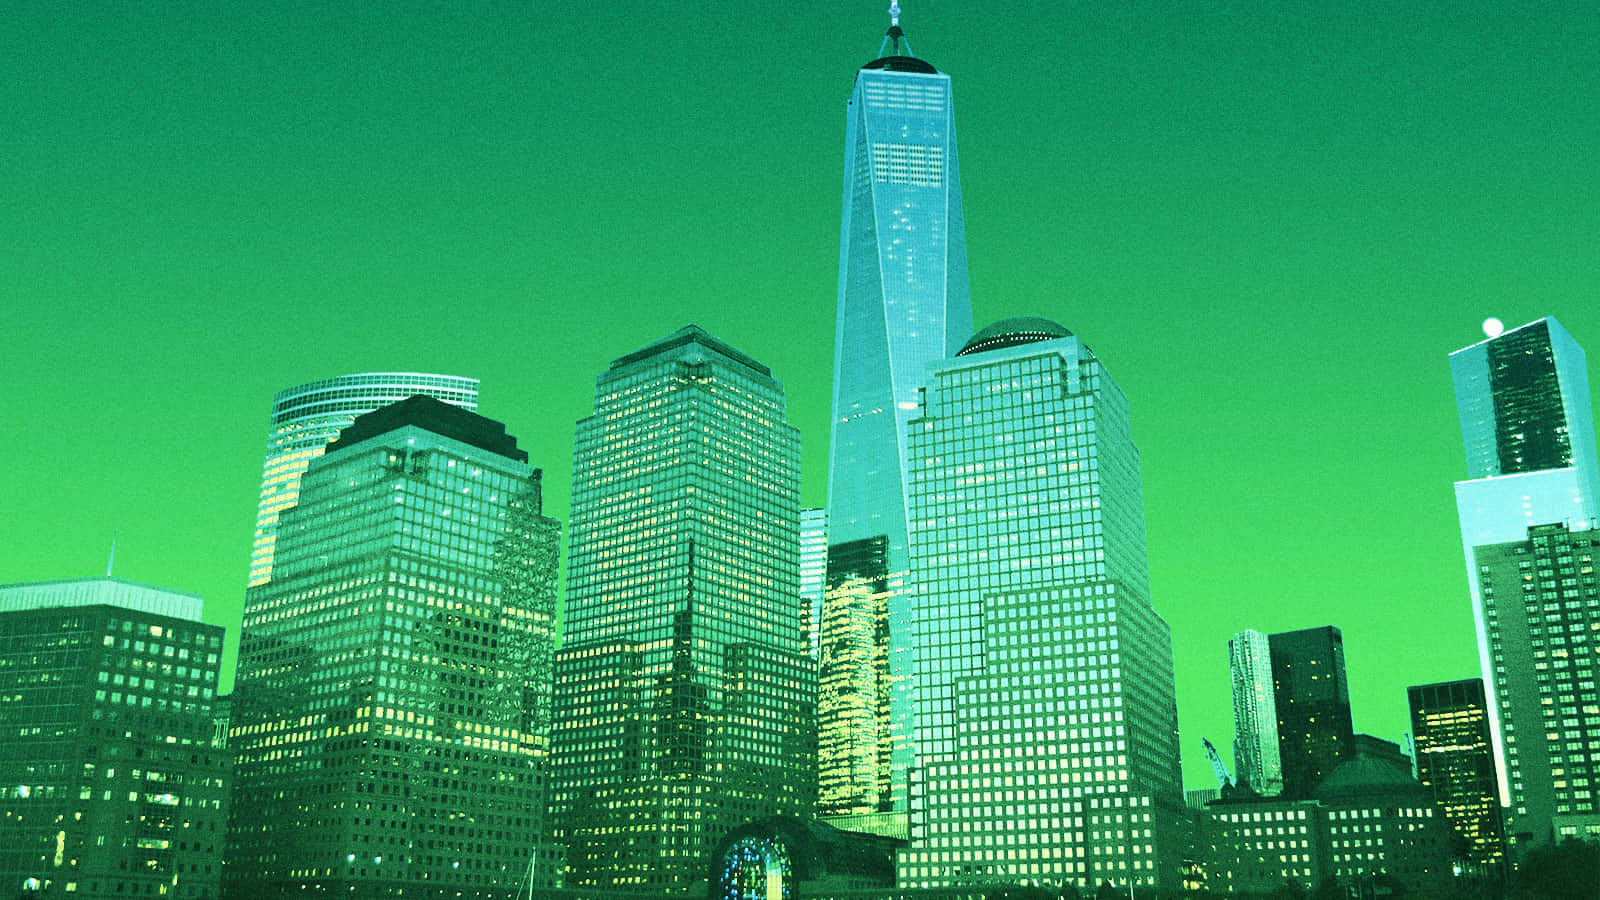 "The iconic New York City skyline"